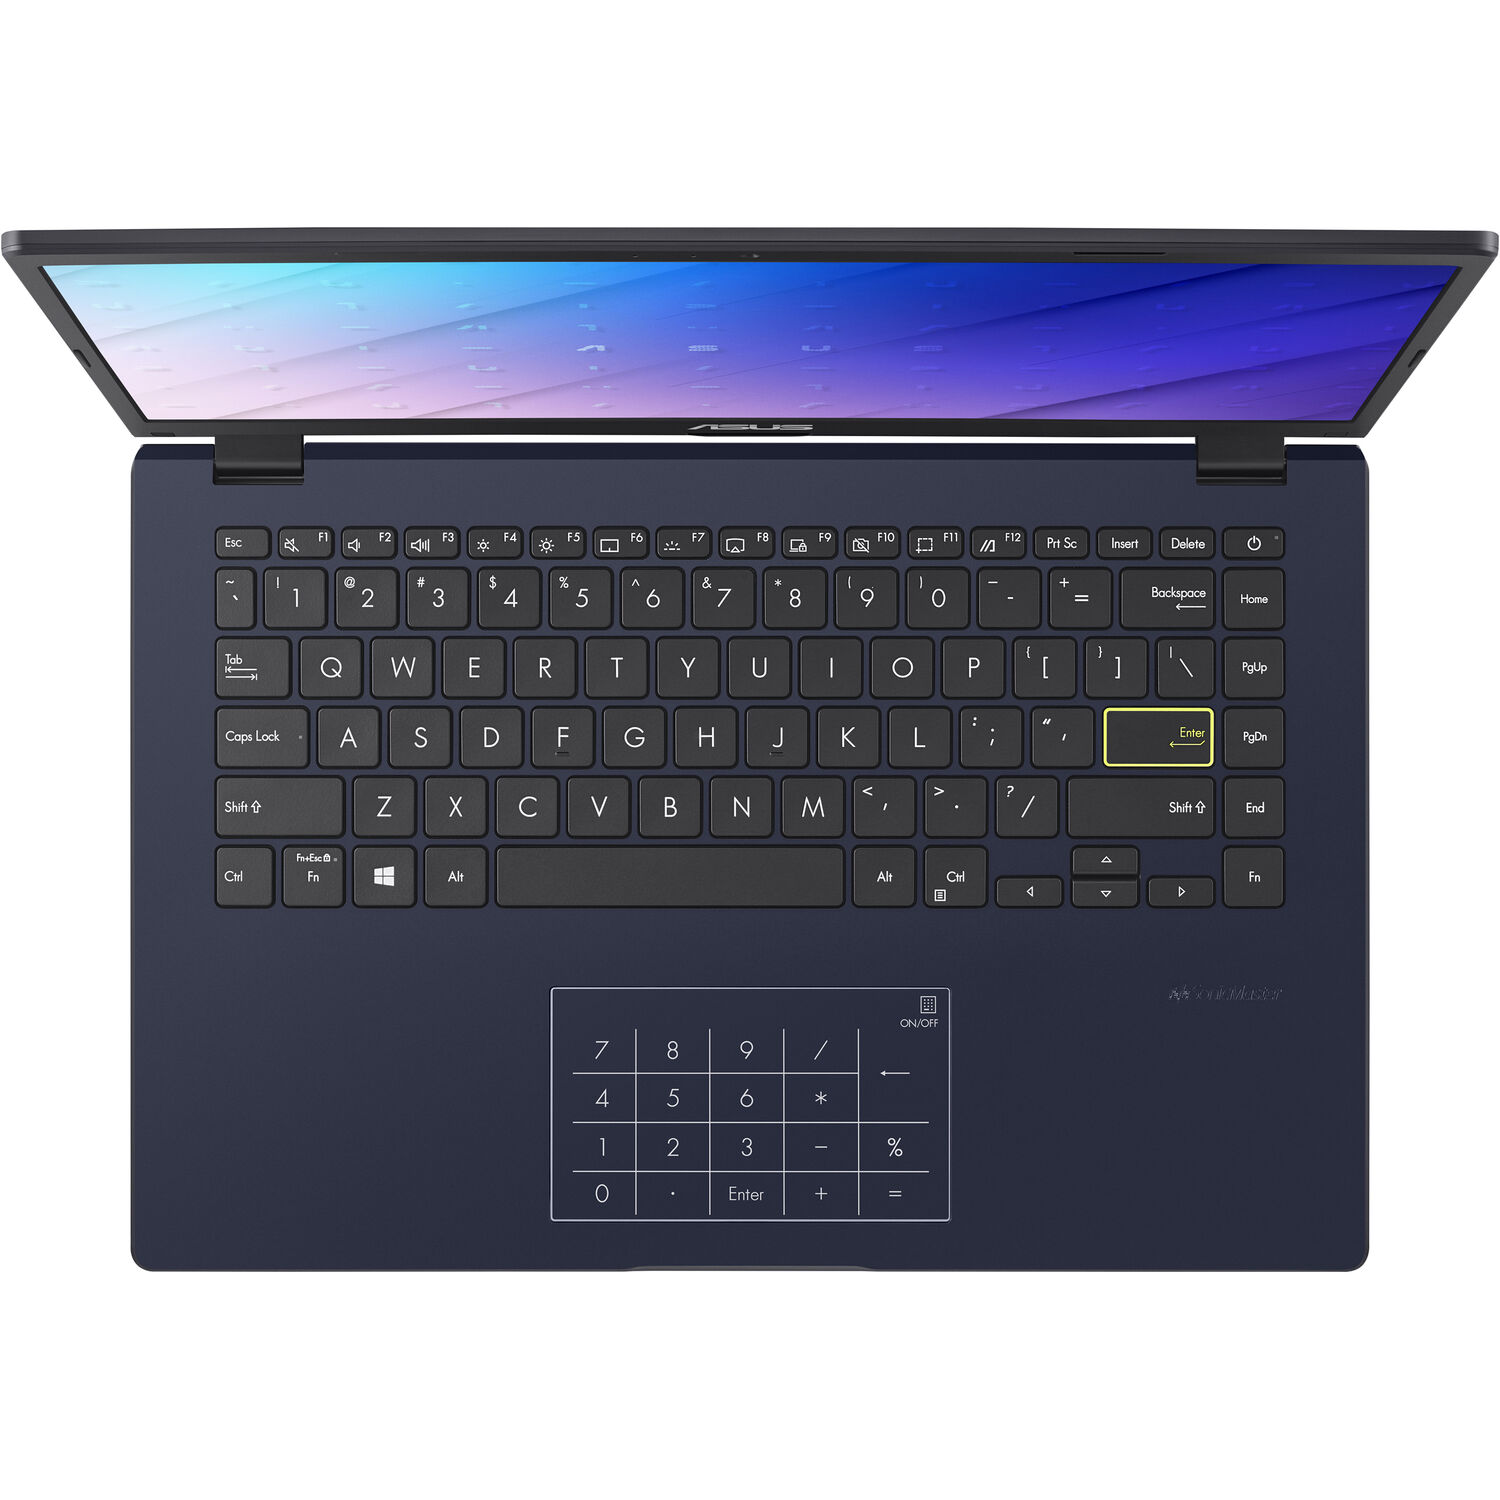 ASUS 14 L410 Everyday Value Laptop (Intel Celeron N4020 2-Core, 4GB RAM, 64GB SSD + 64GB eMMC, 14.0" Full HD (1920x1080), Intel UHD 600, Wifi, Bluetooth, Webcam, 1xUSB 3.2, 1xHDMI, Win 10 Home) - image 3 of 6